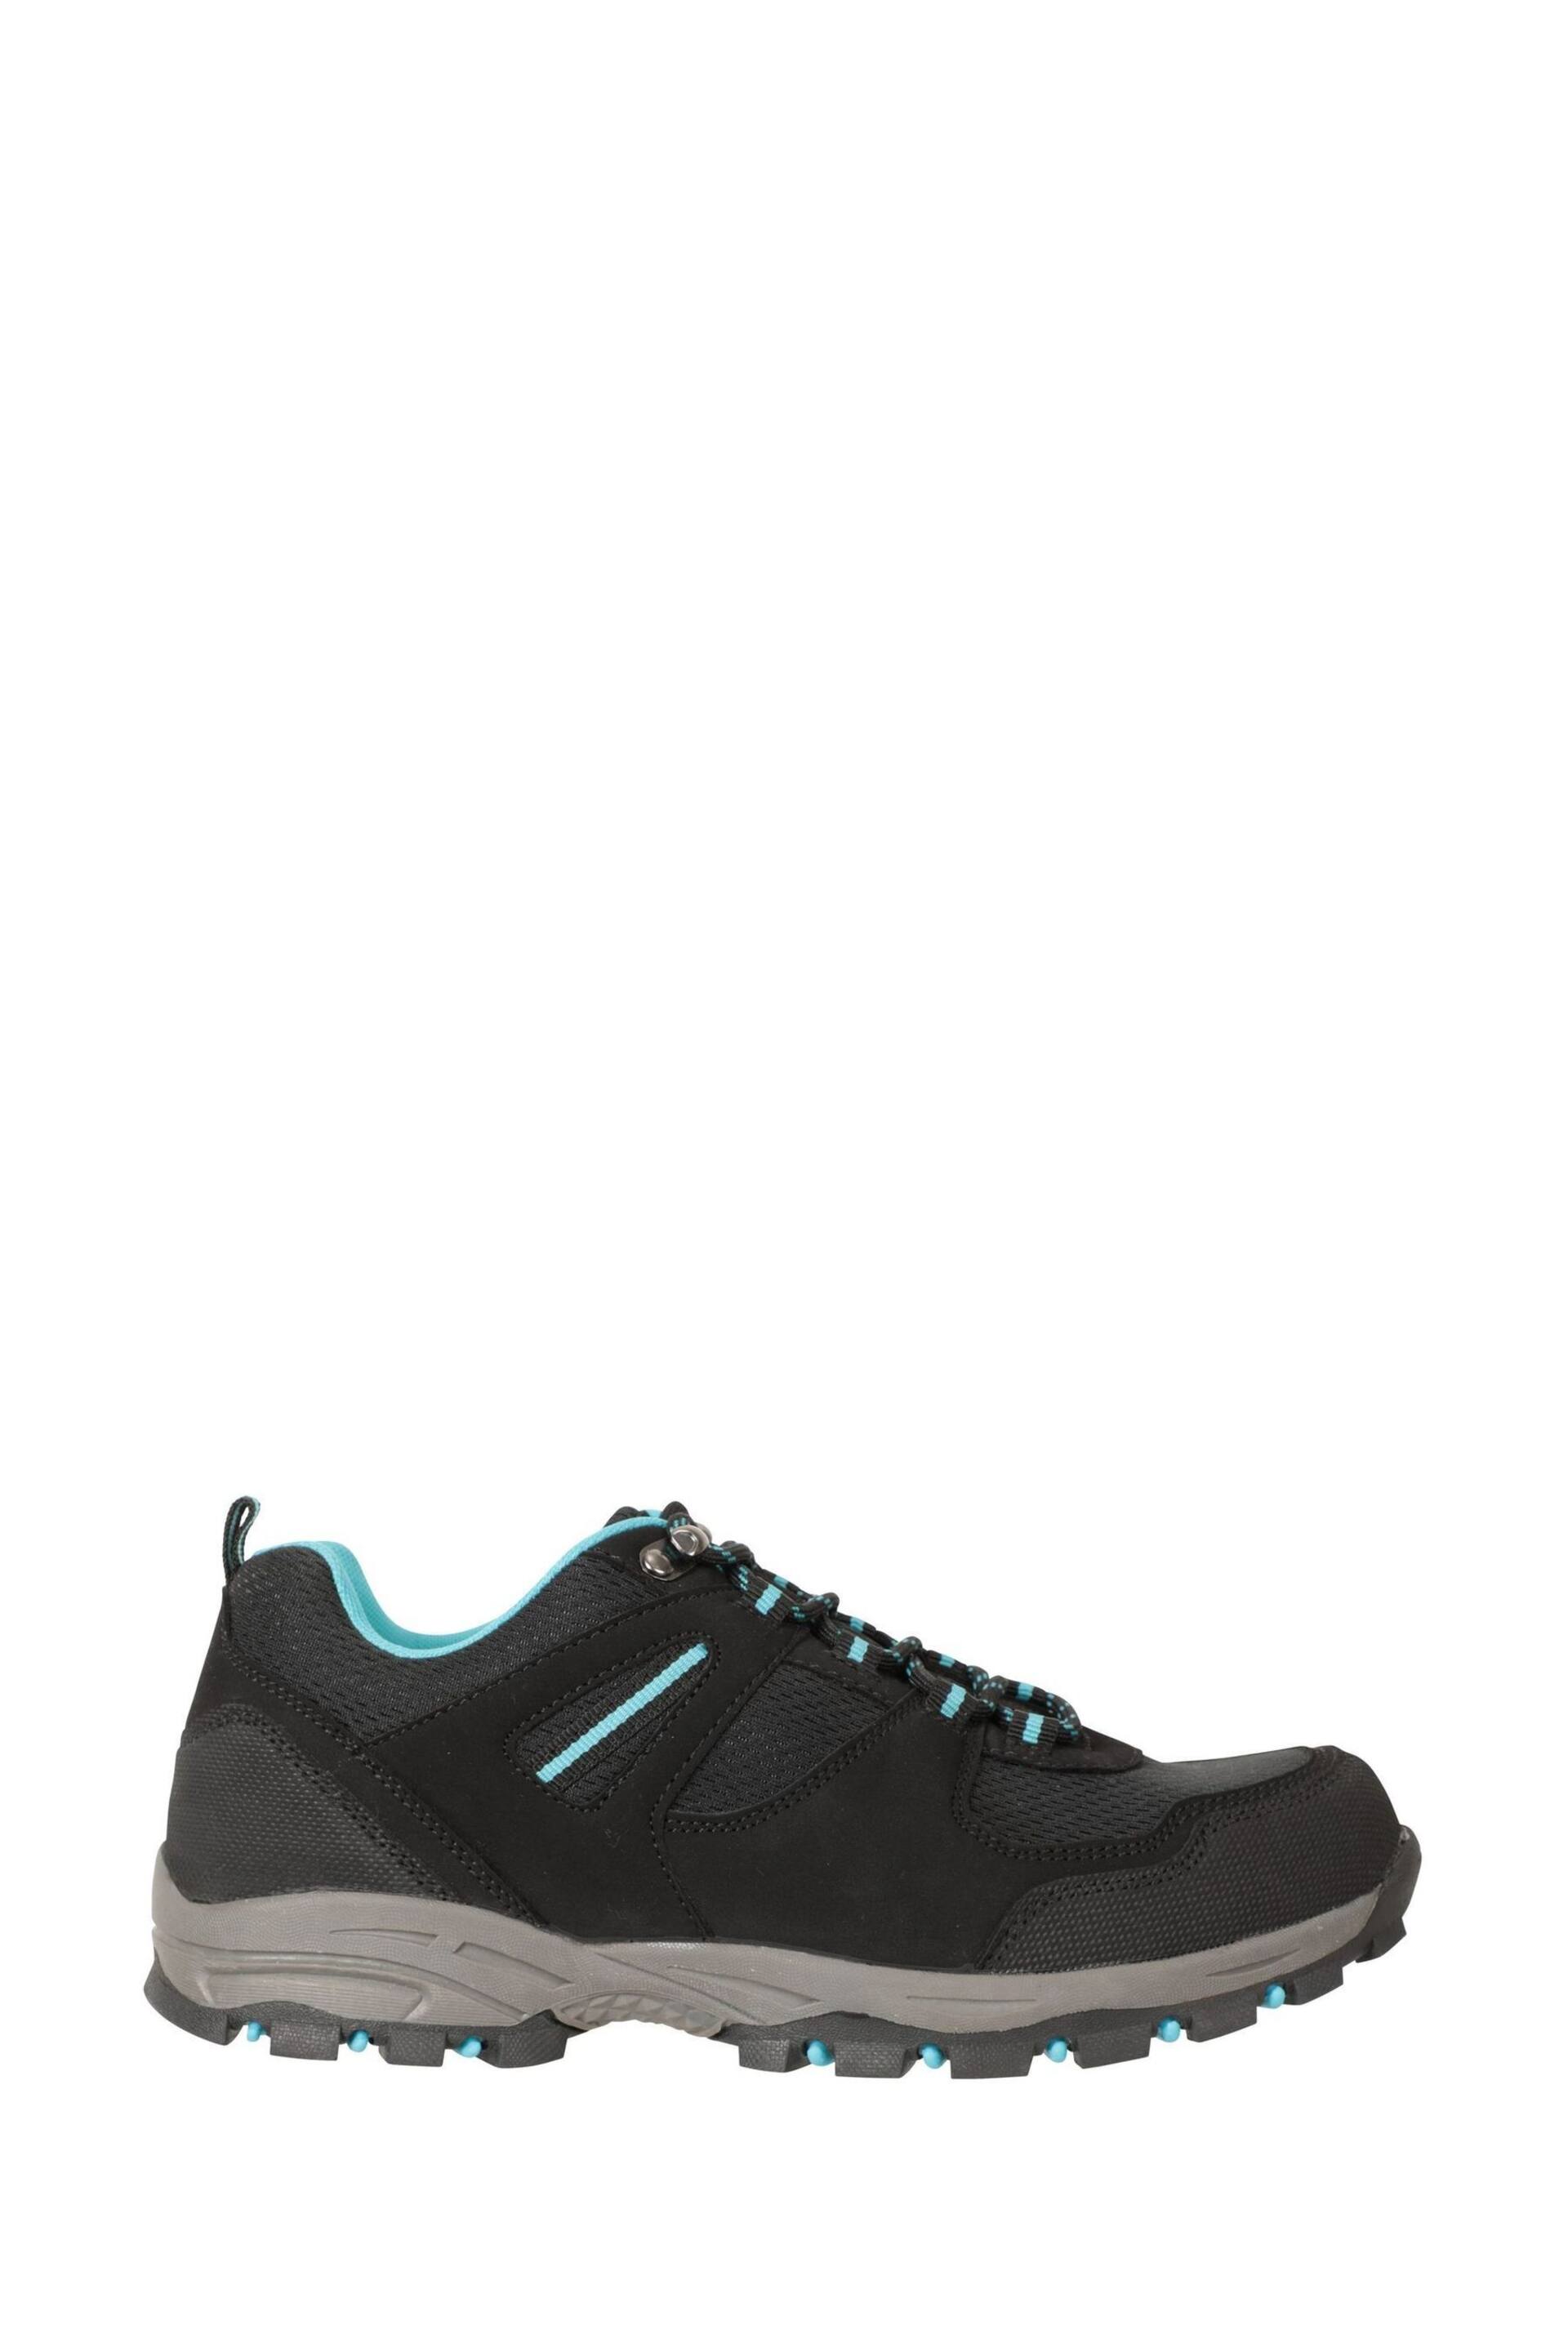 Mountain Warehouse Black Womens Mcleod Walking Shoes - Image 2 of 5